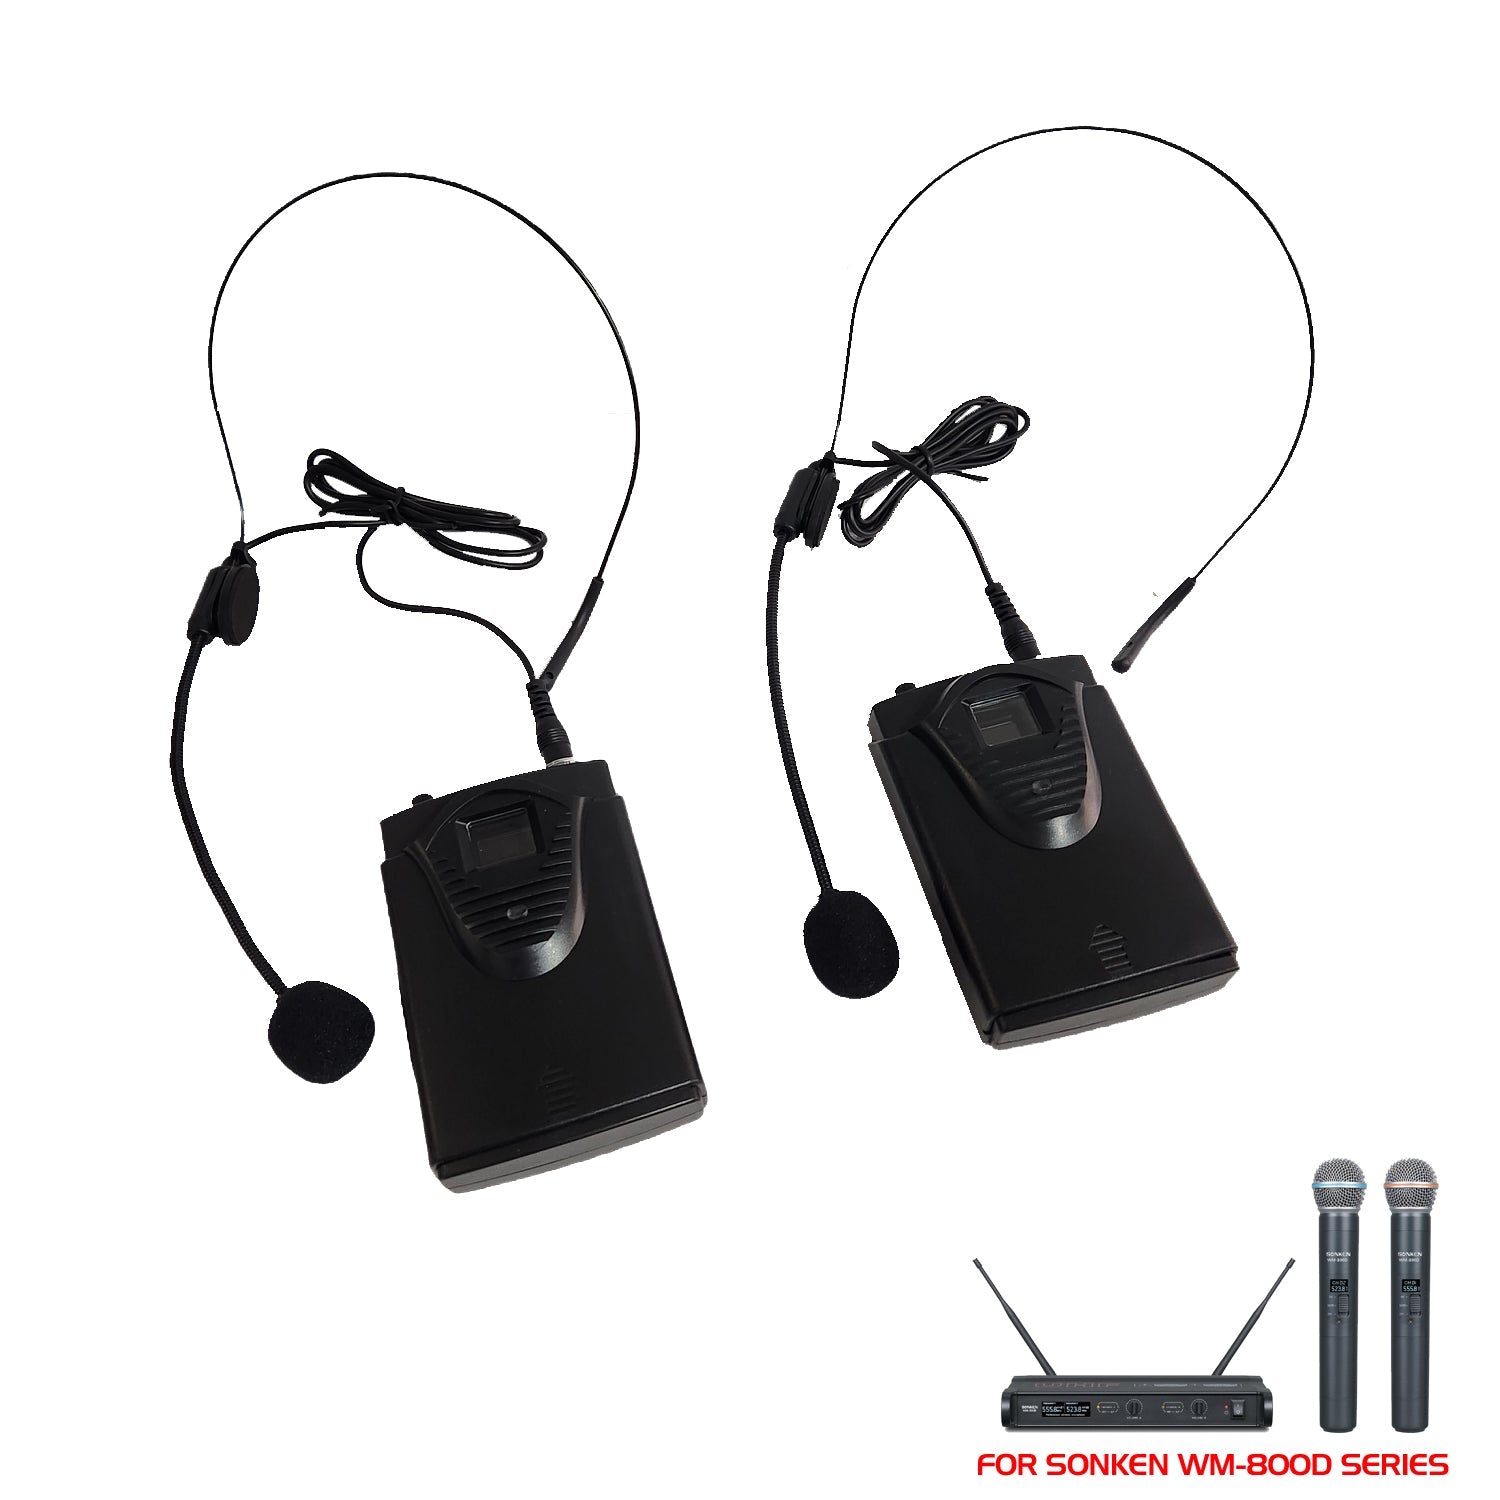 Sonken WM-800D Series (Optional) 2x Wireless Body Packs and 2x Headset Microphones - Karaoke Home Entertainment